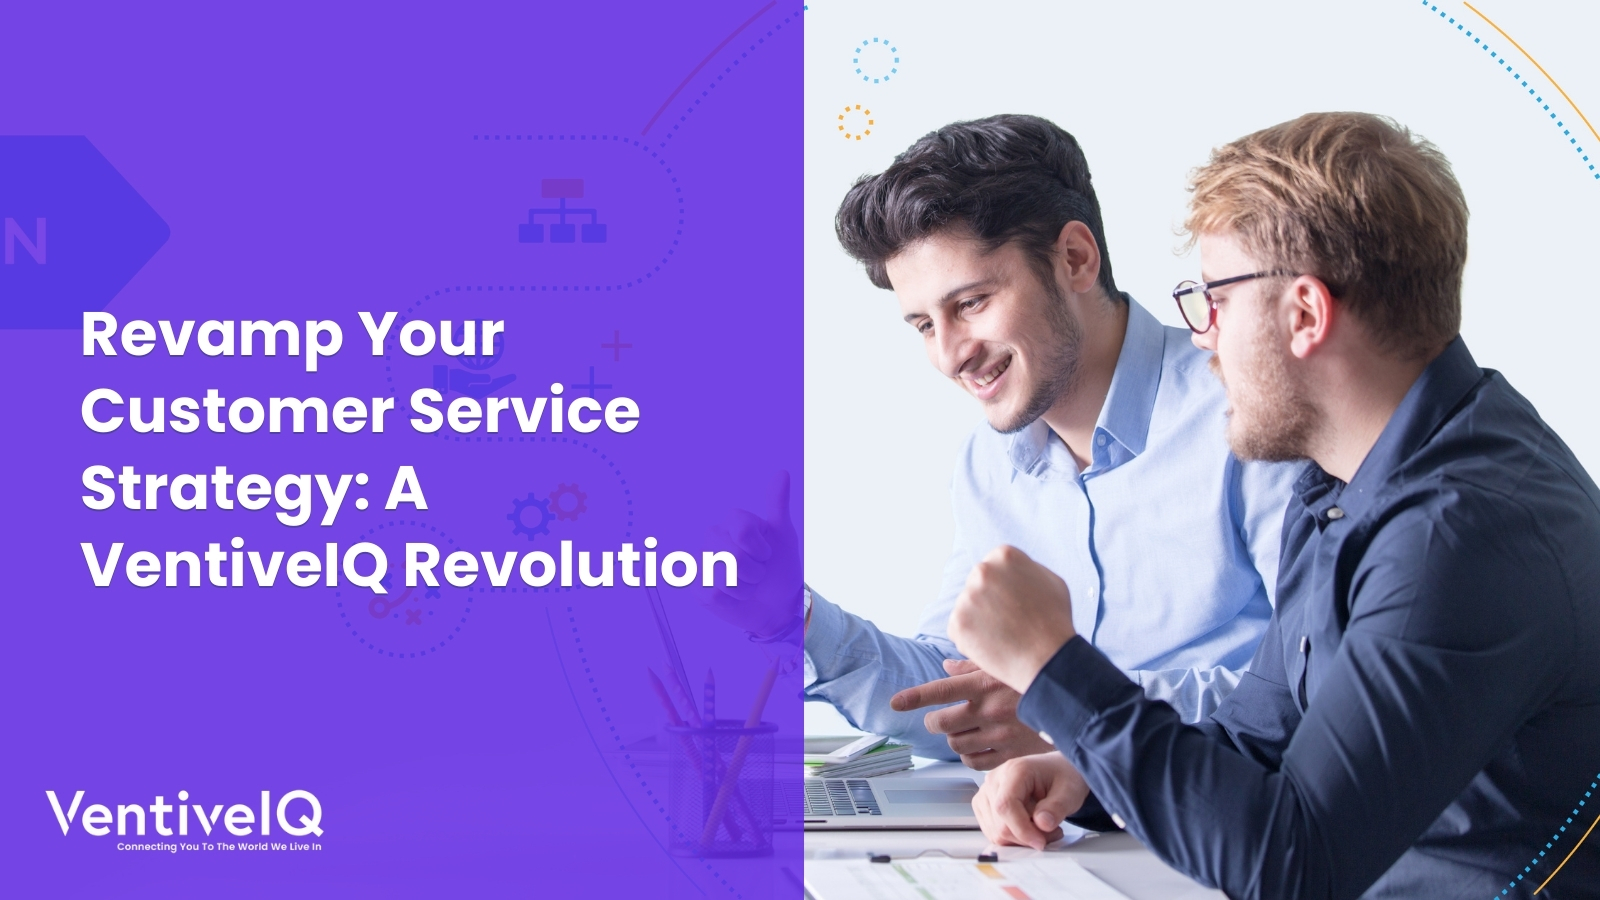 Revamp Your Customer Service Strategy: A VentiveIQ Revolution